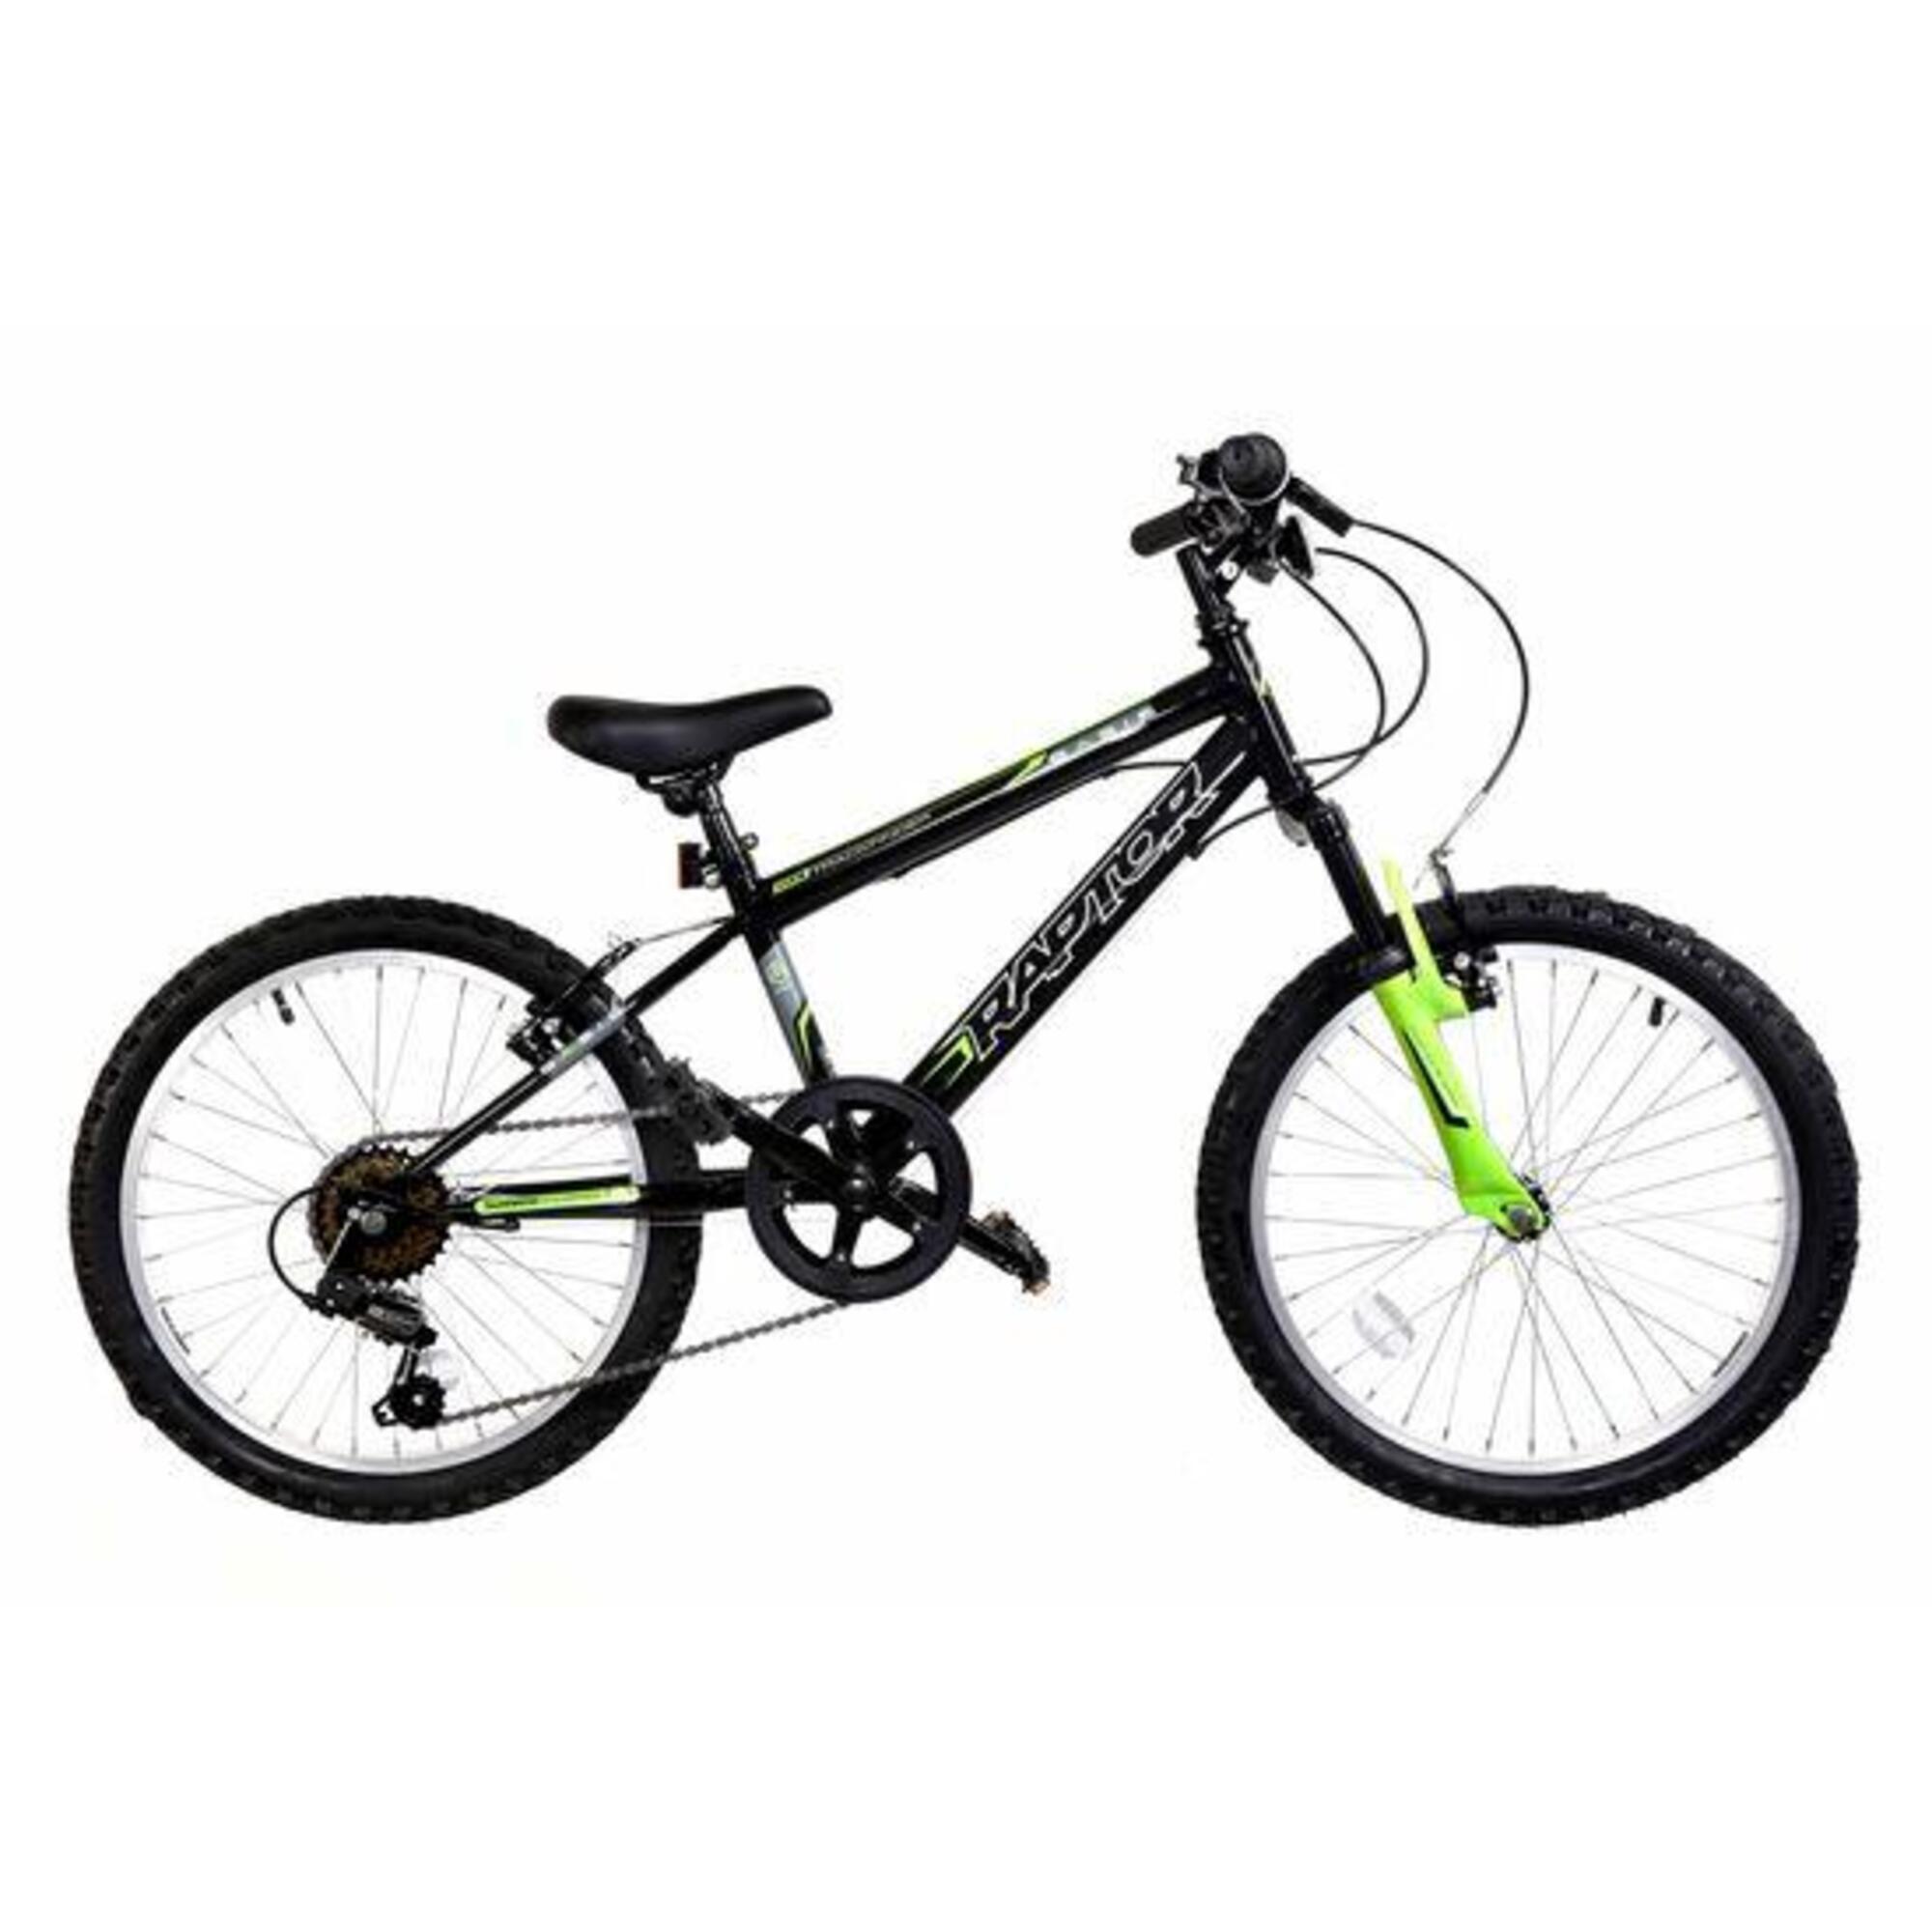 BASIS Basis Raptor Junior Hardtail Mountain Bike 20in Wheel - Gloss Black/Green